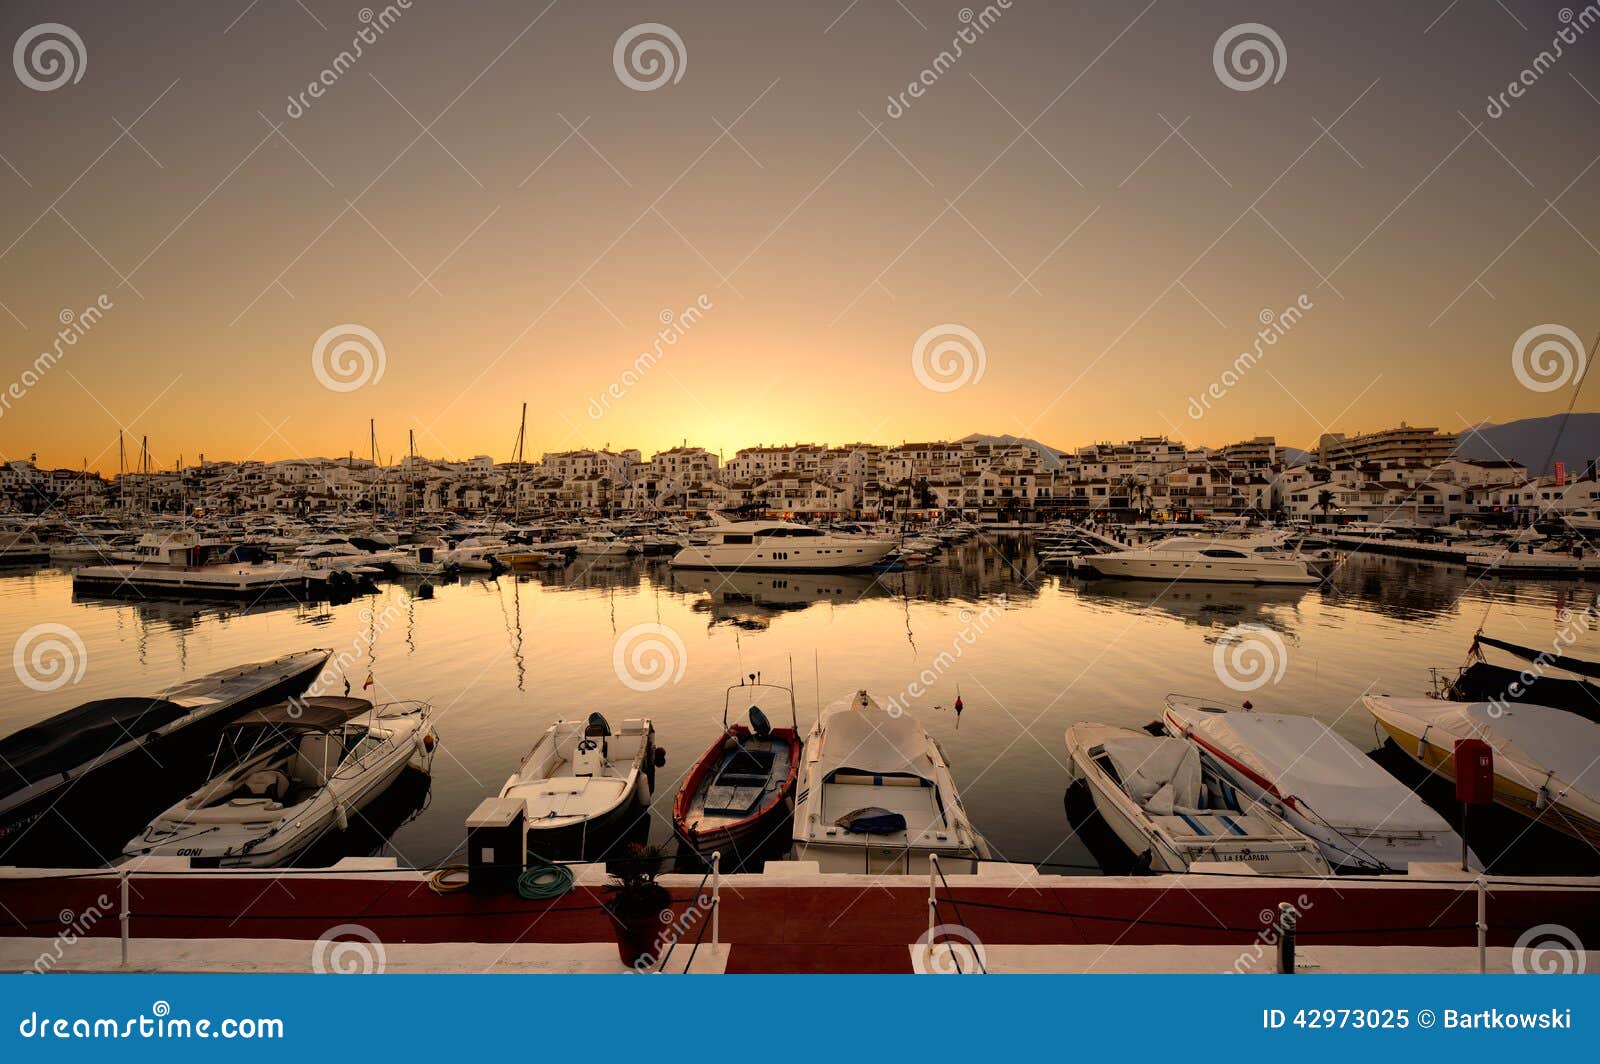 luxury yachts and motor boats moored in puerto banus marina in marbella, spain